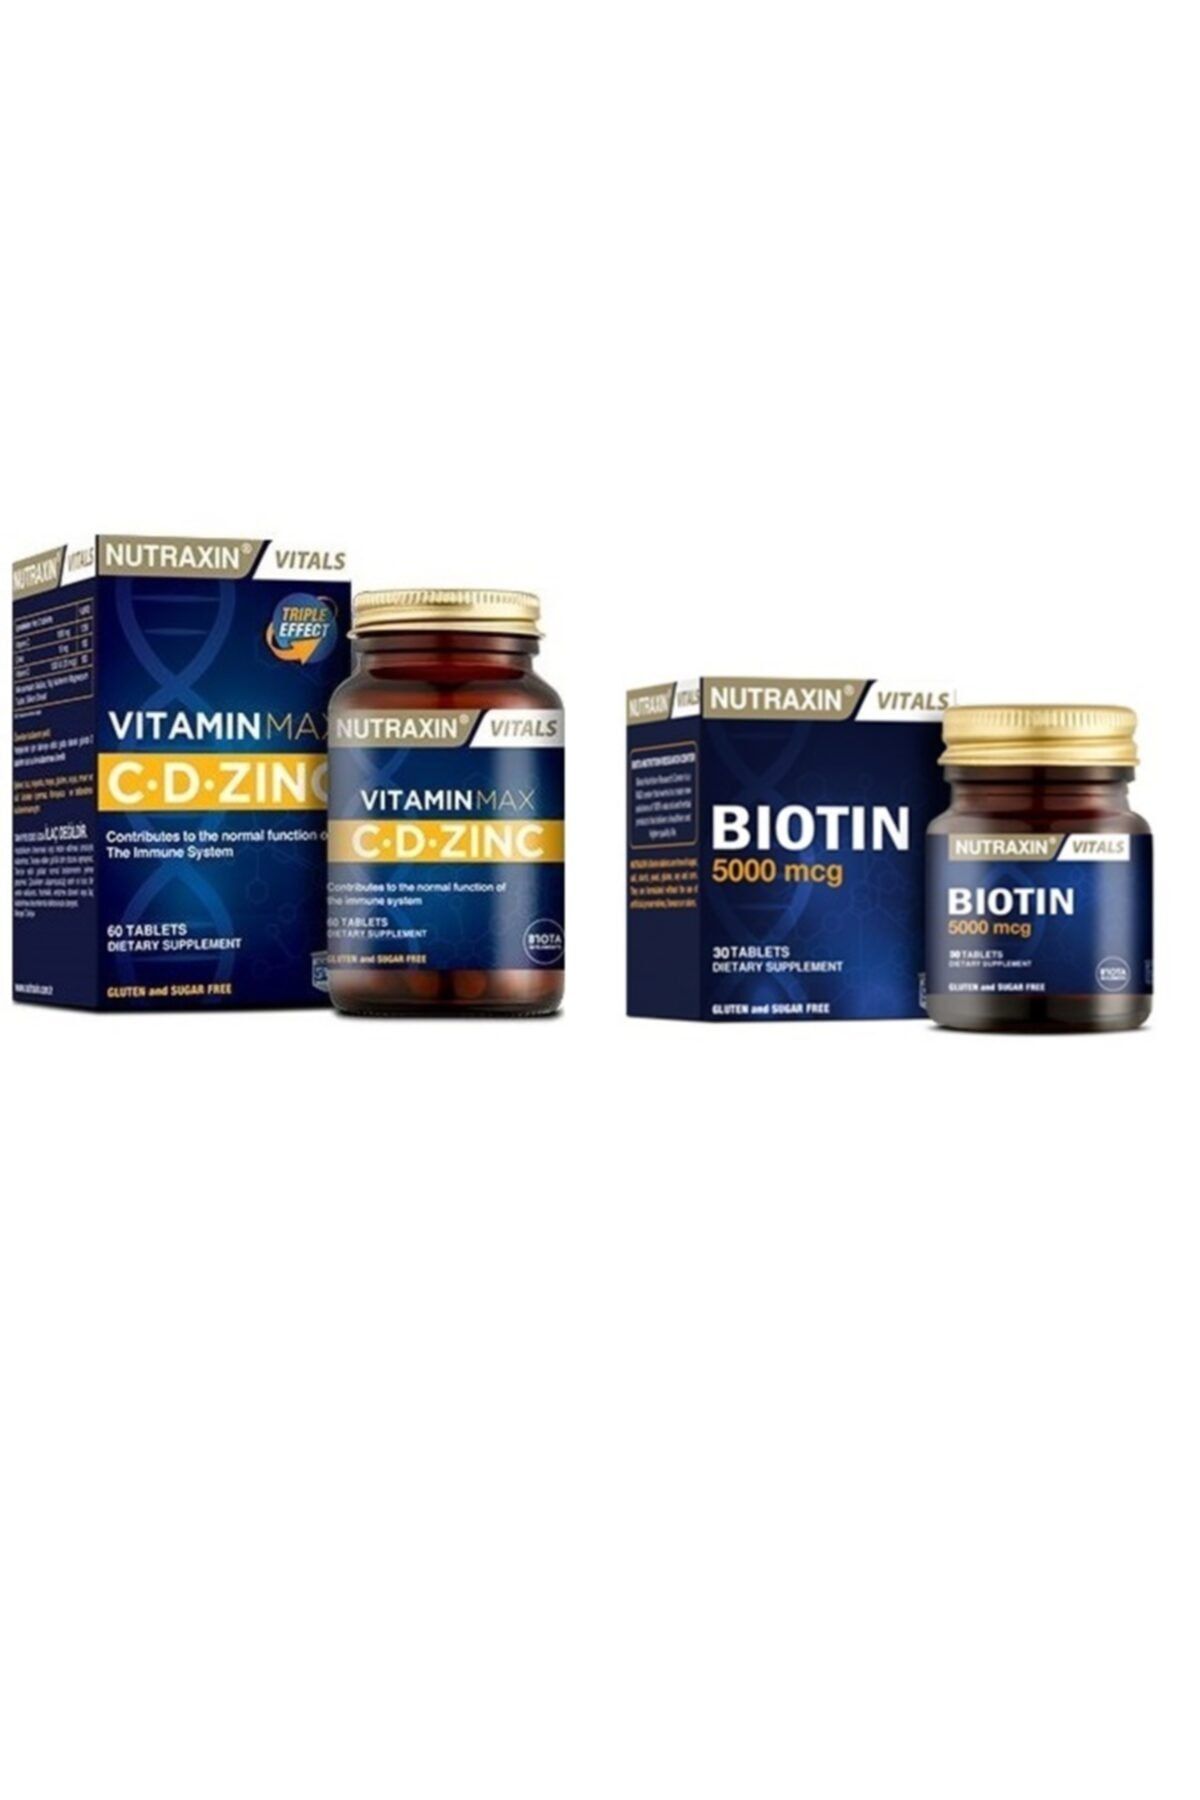 Nutraxin 1000 Mg C Vitamini,1000 Iu D Vitamini Ve 10 Mg Çinko 60 Tablet + 5000 Mcg Biotin 30 Tablet